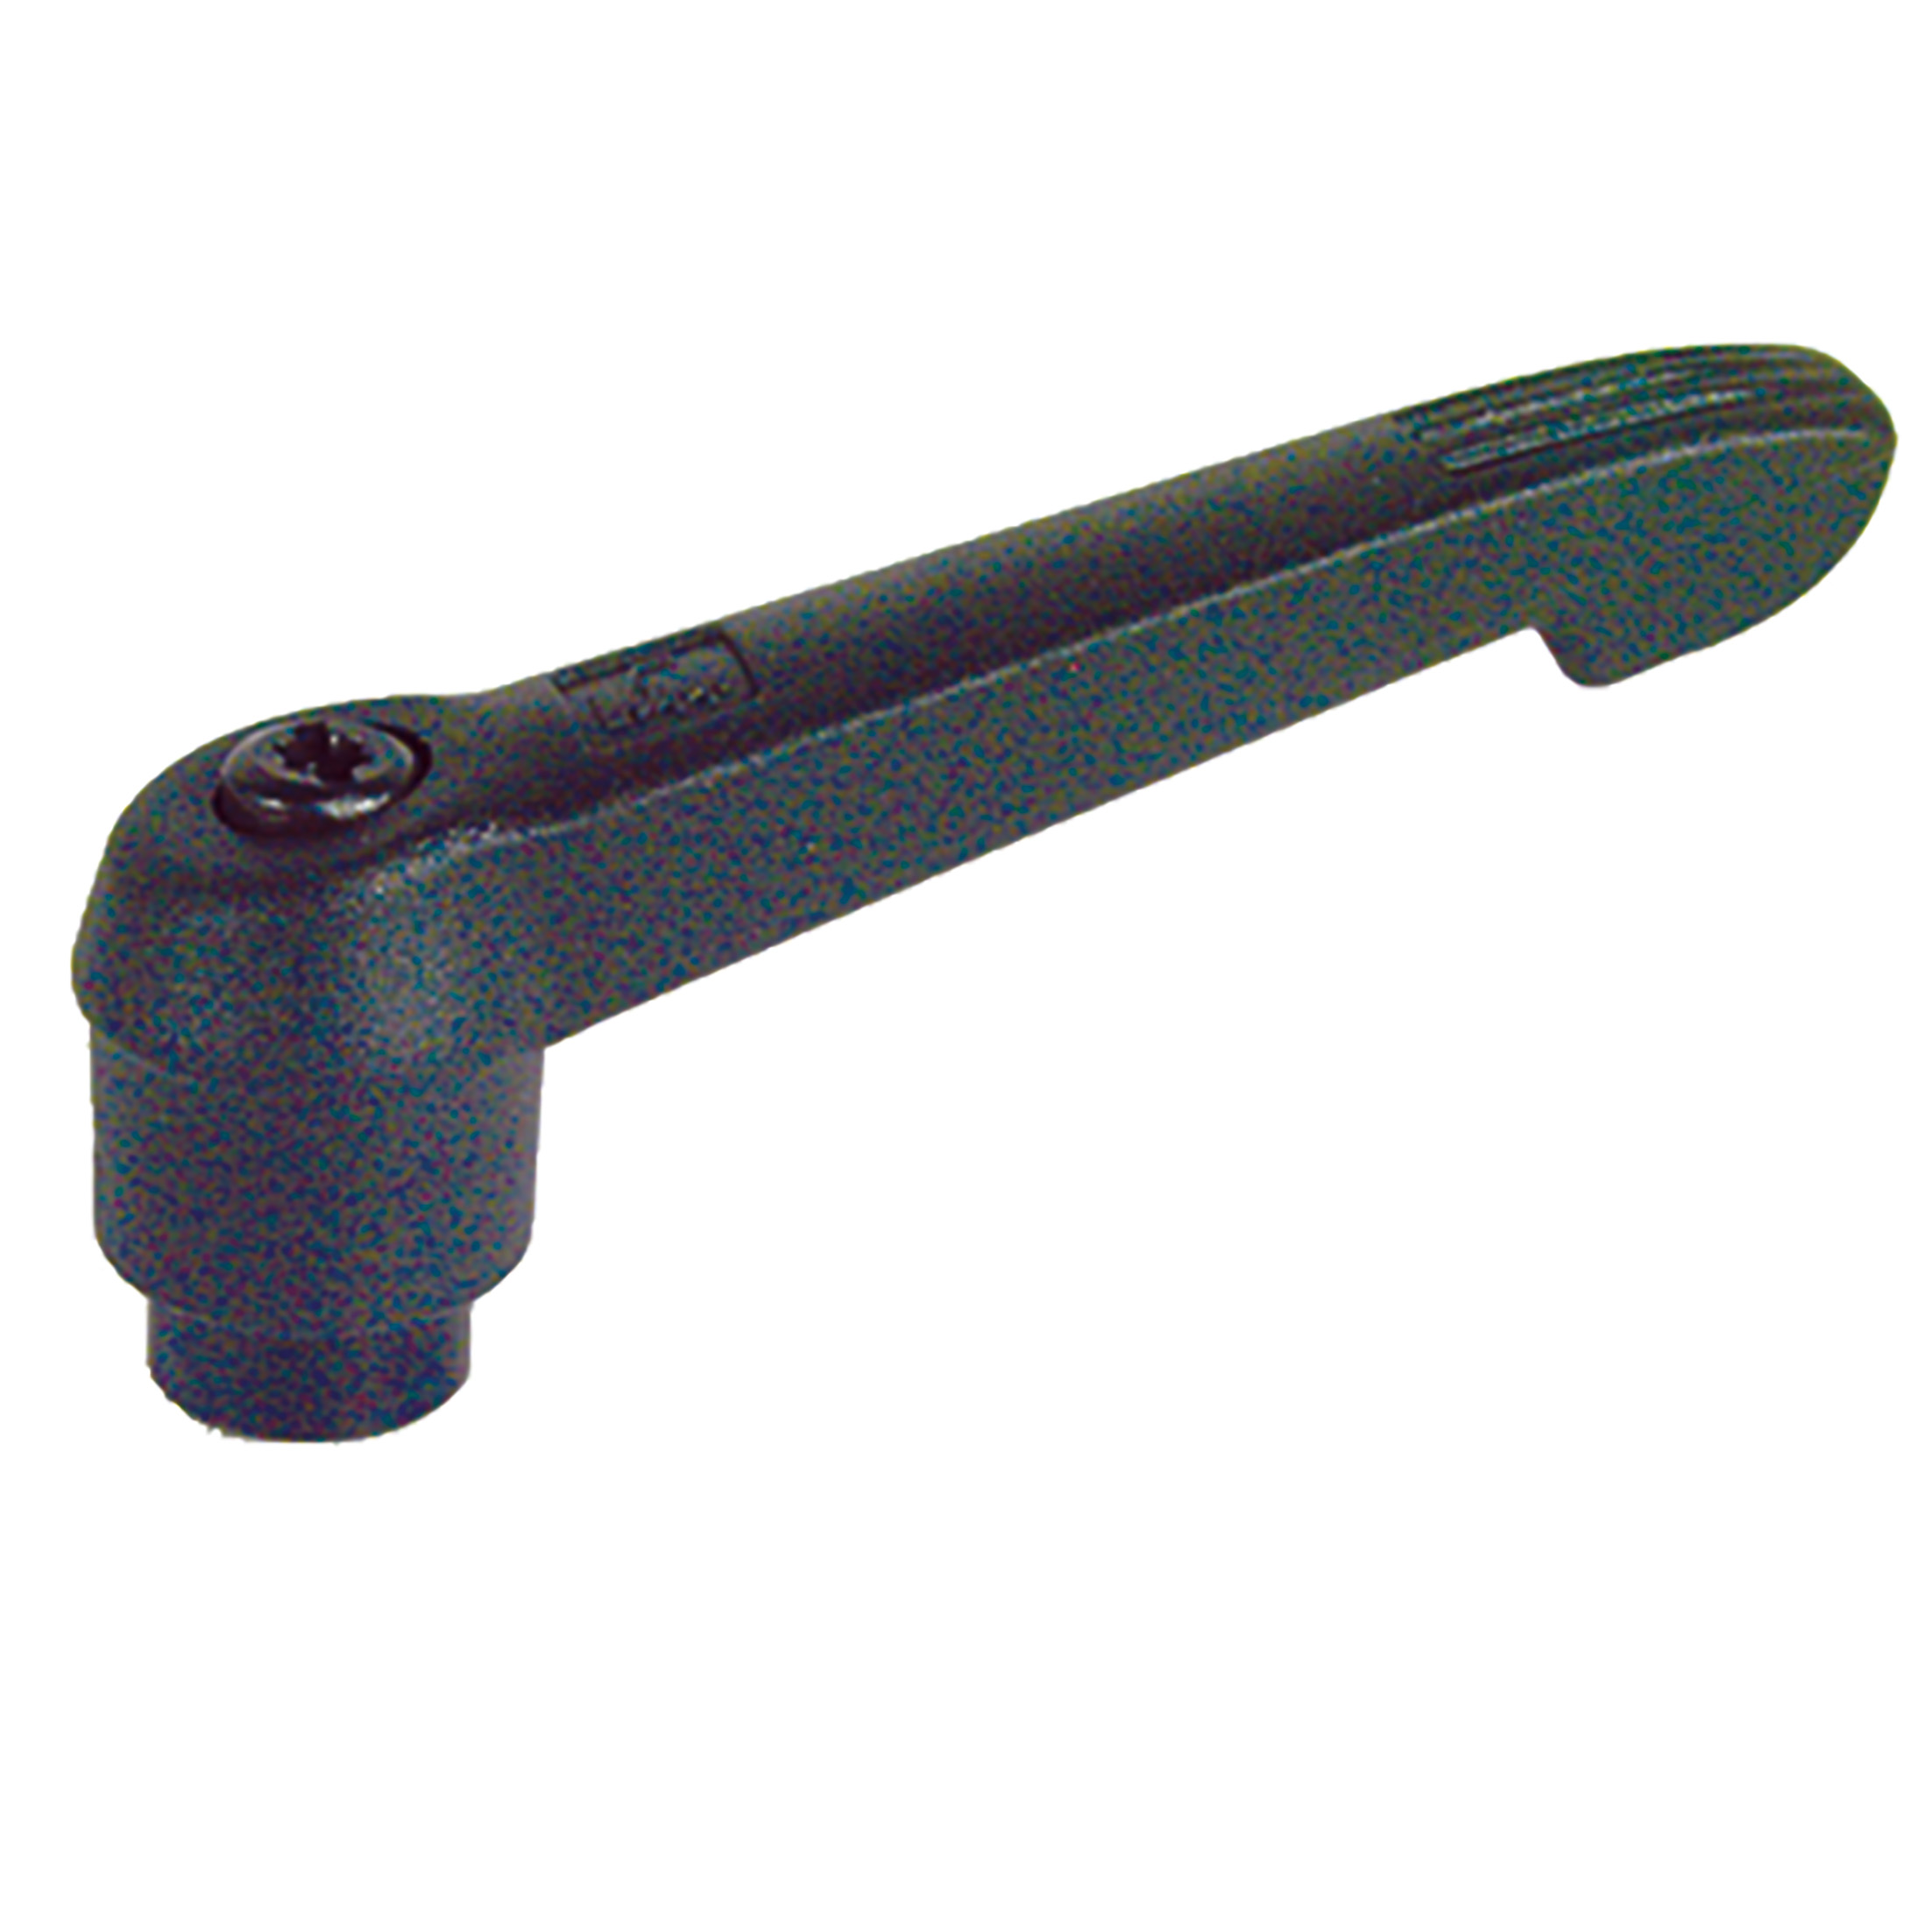 Technopolymer clamping lever - female - Plastic - Stainless steel grade 303 - 